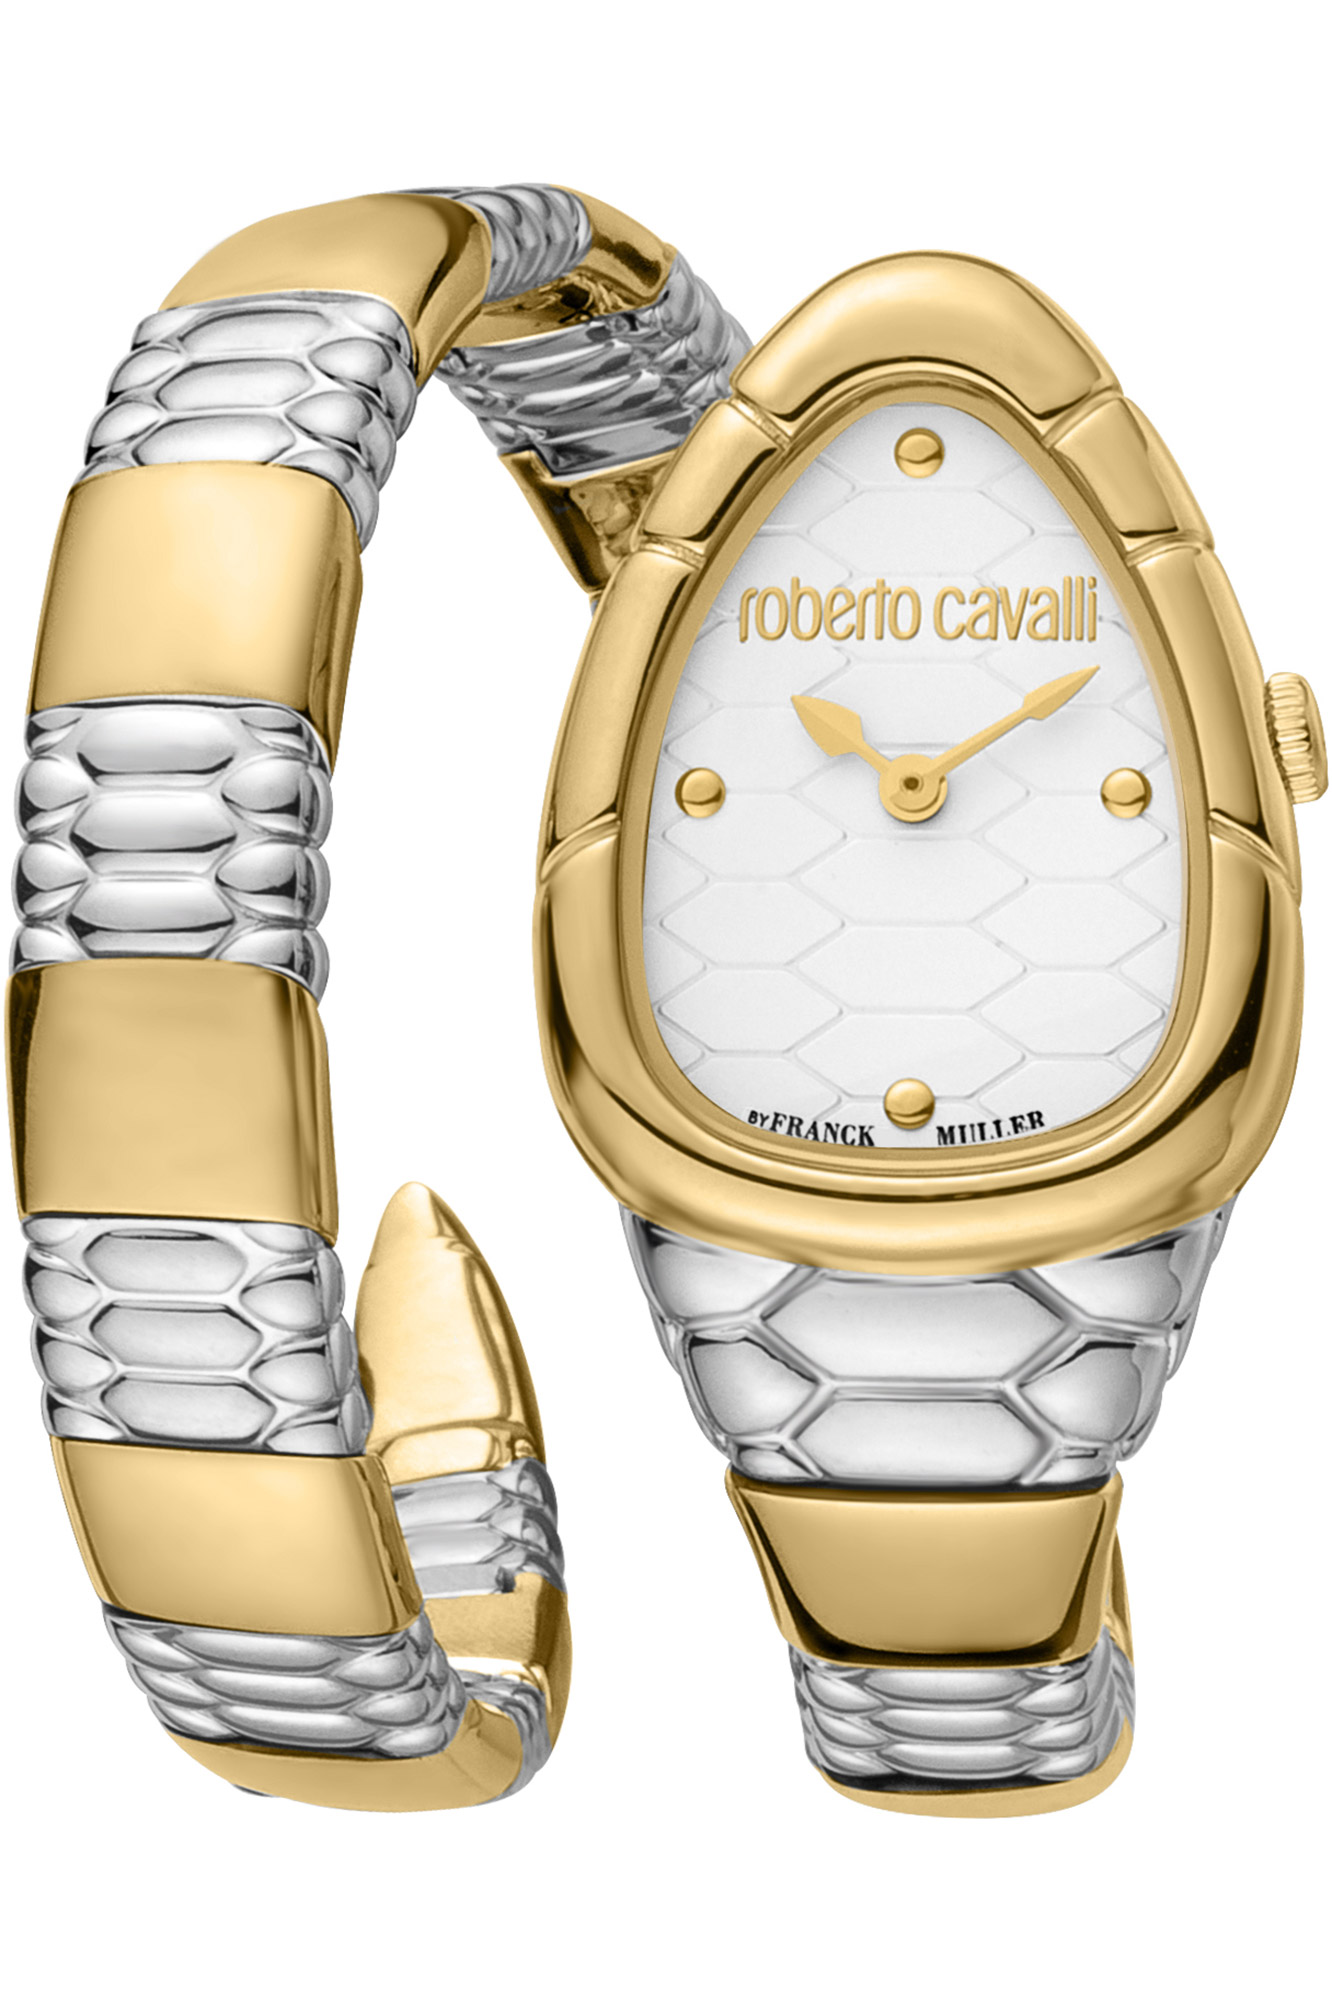 Orologio Roberto Cavalli by Franck Muller rv1l184m0061